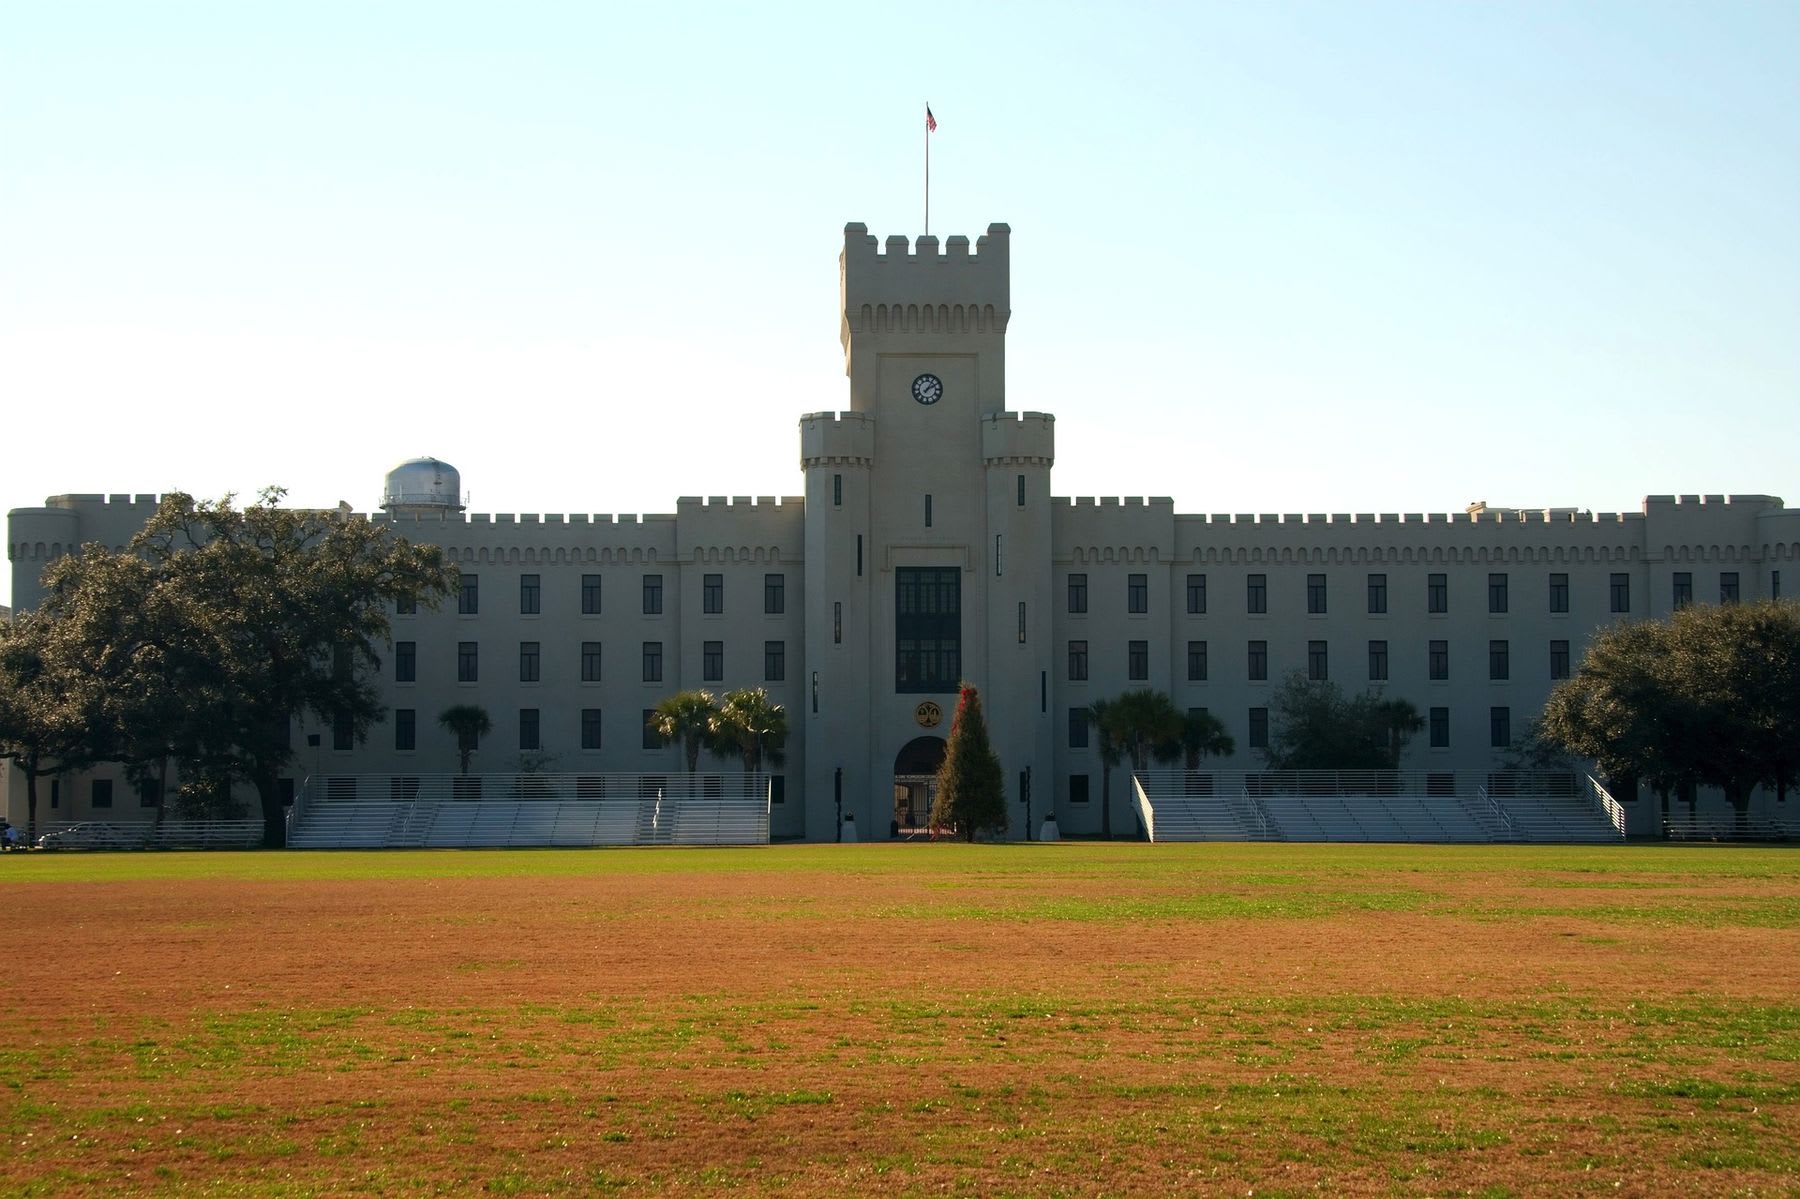 Building of a university in South Carolina